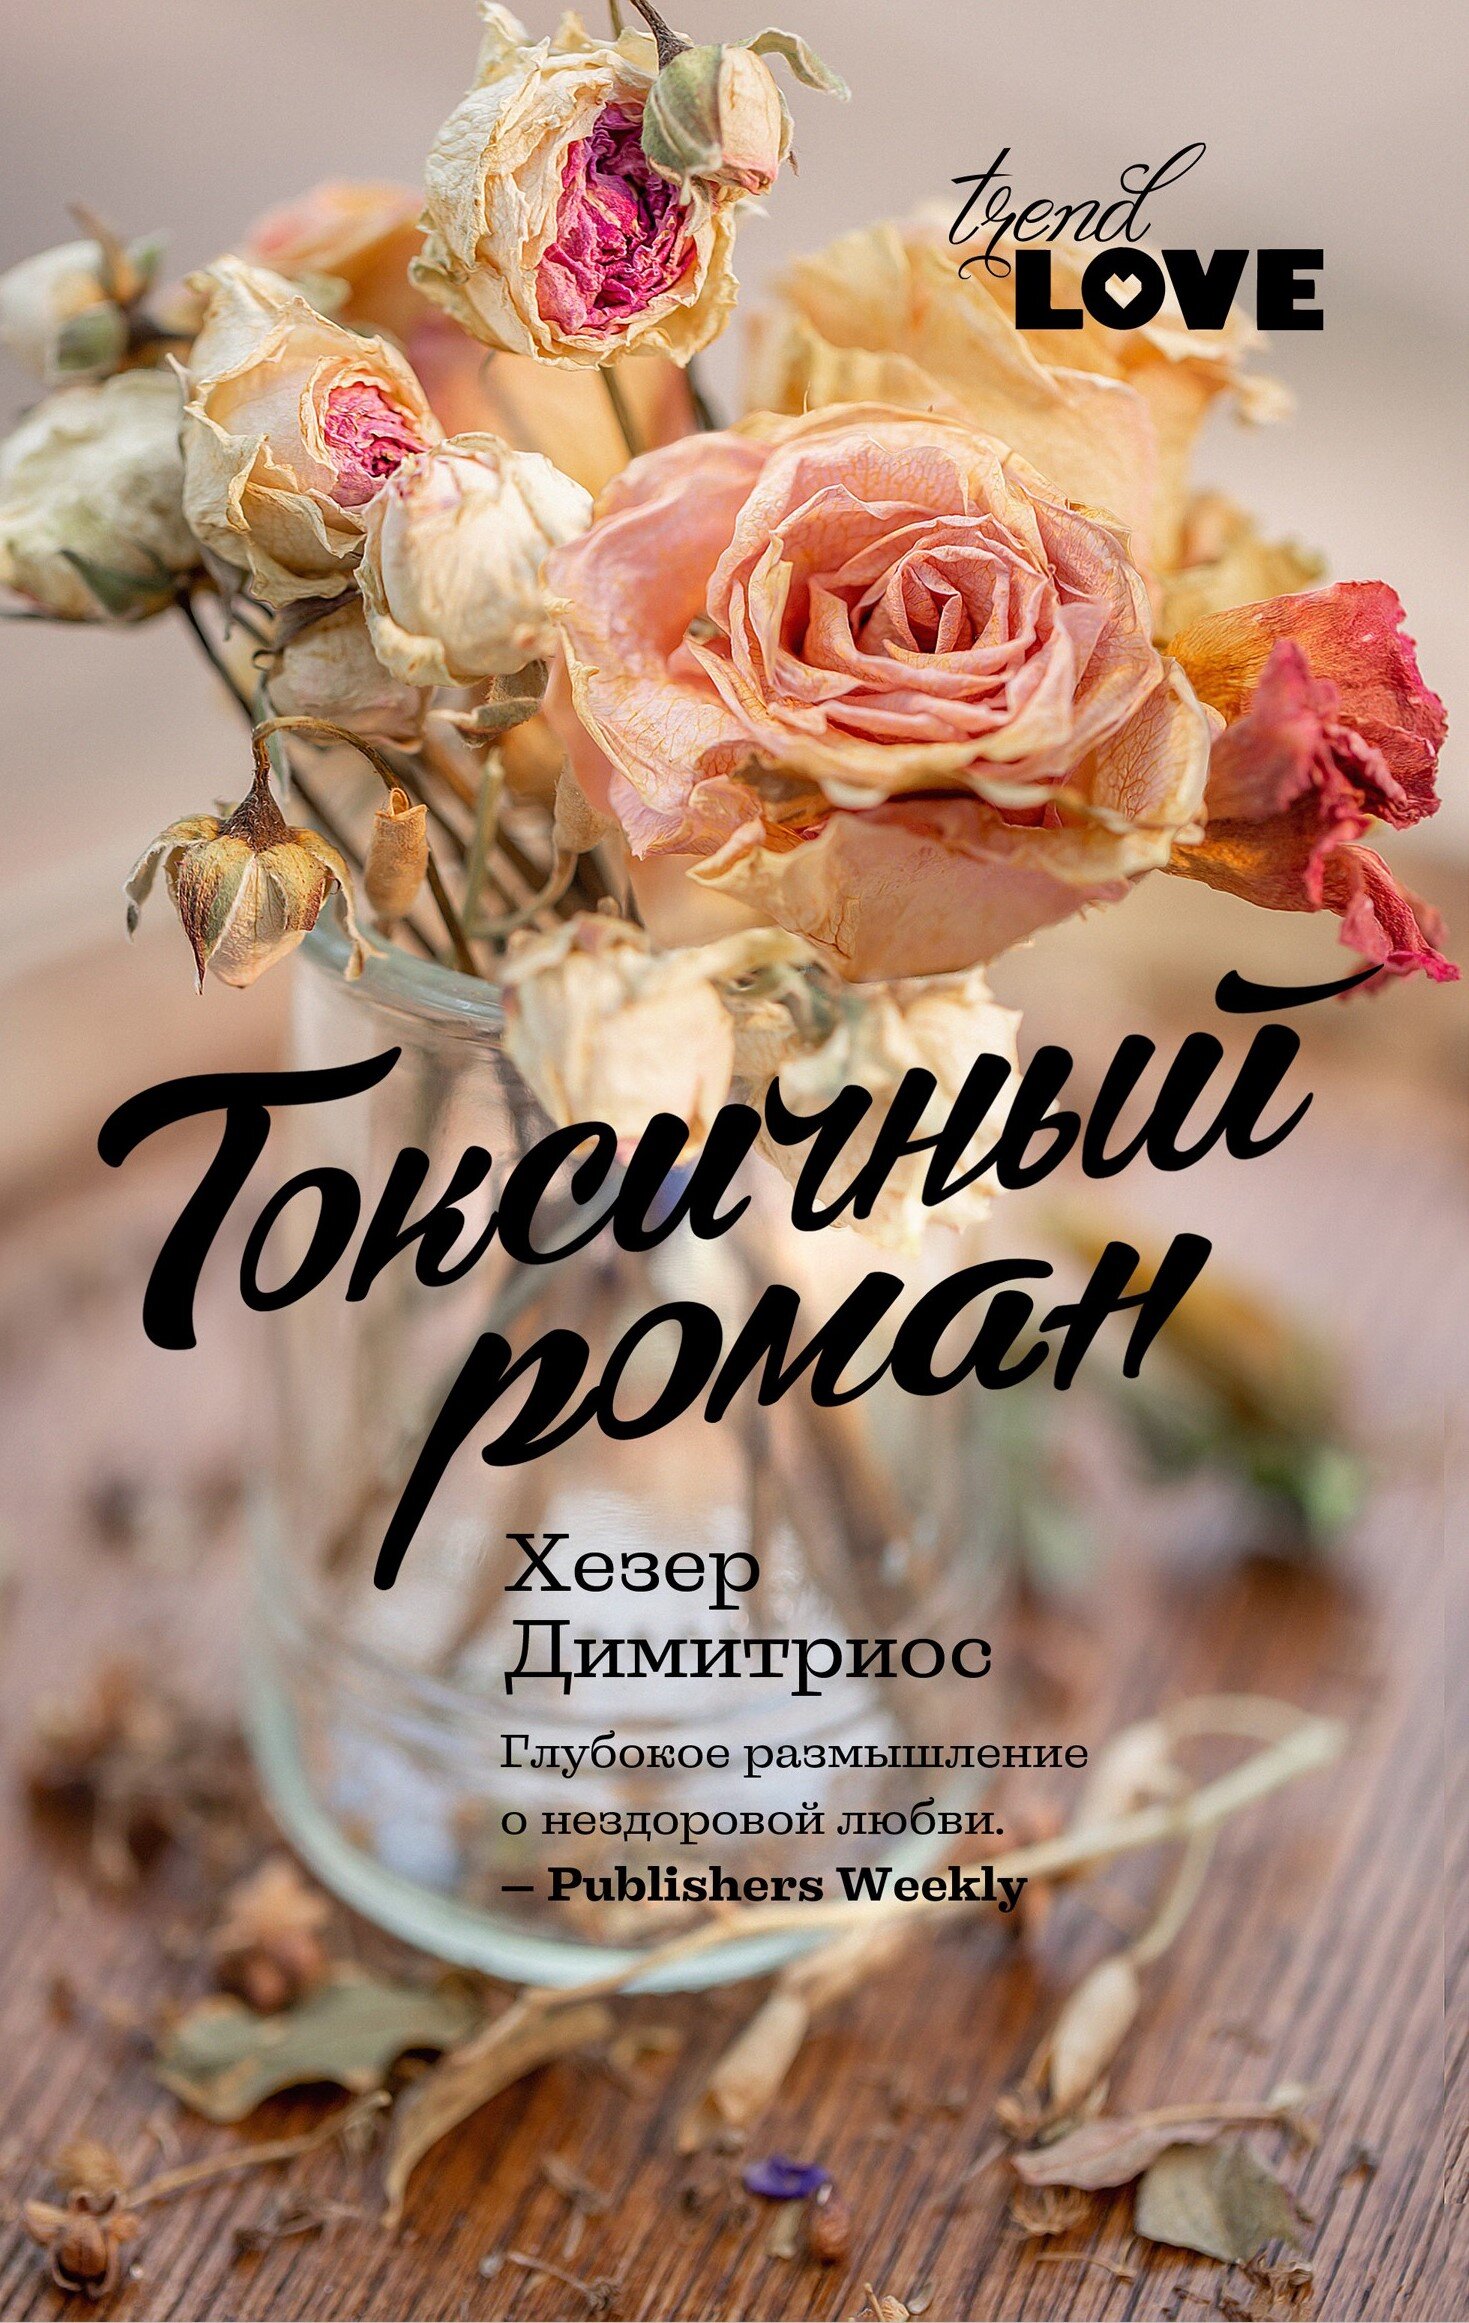 Demetrios_BAD ROMANCE_Russian cover.jpg